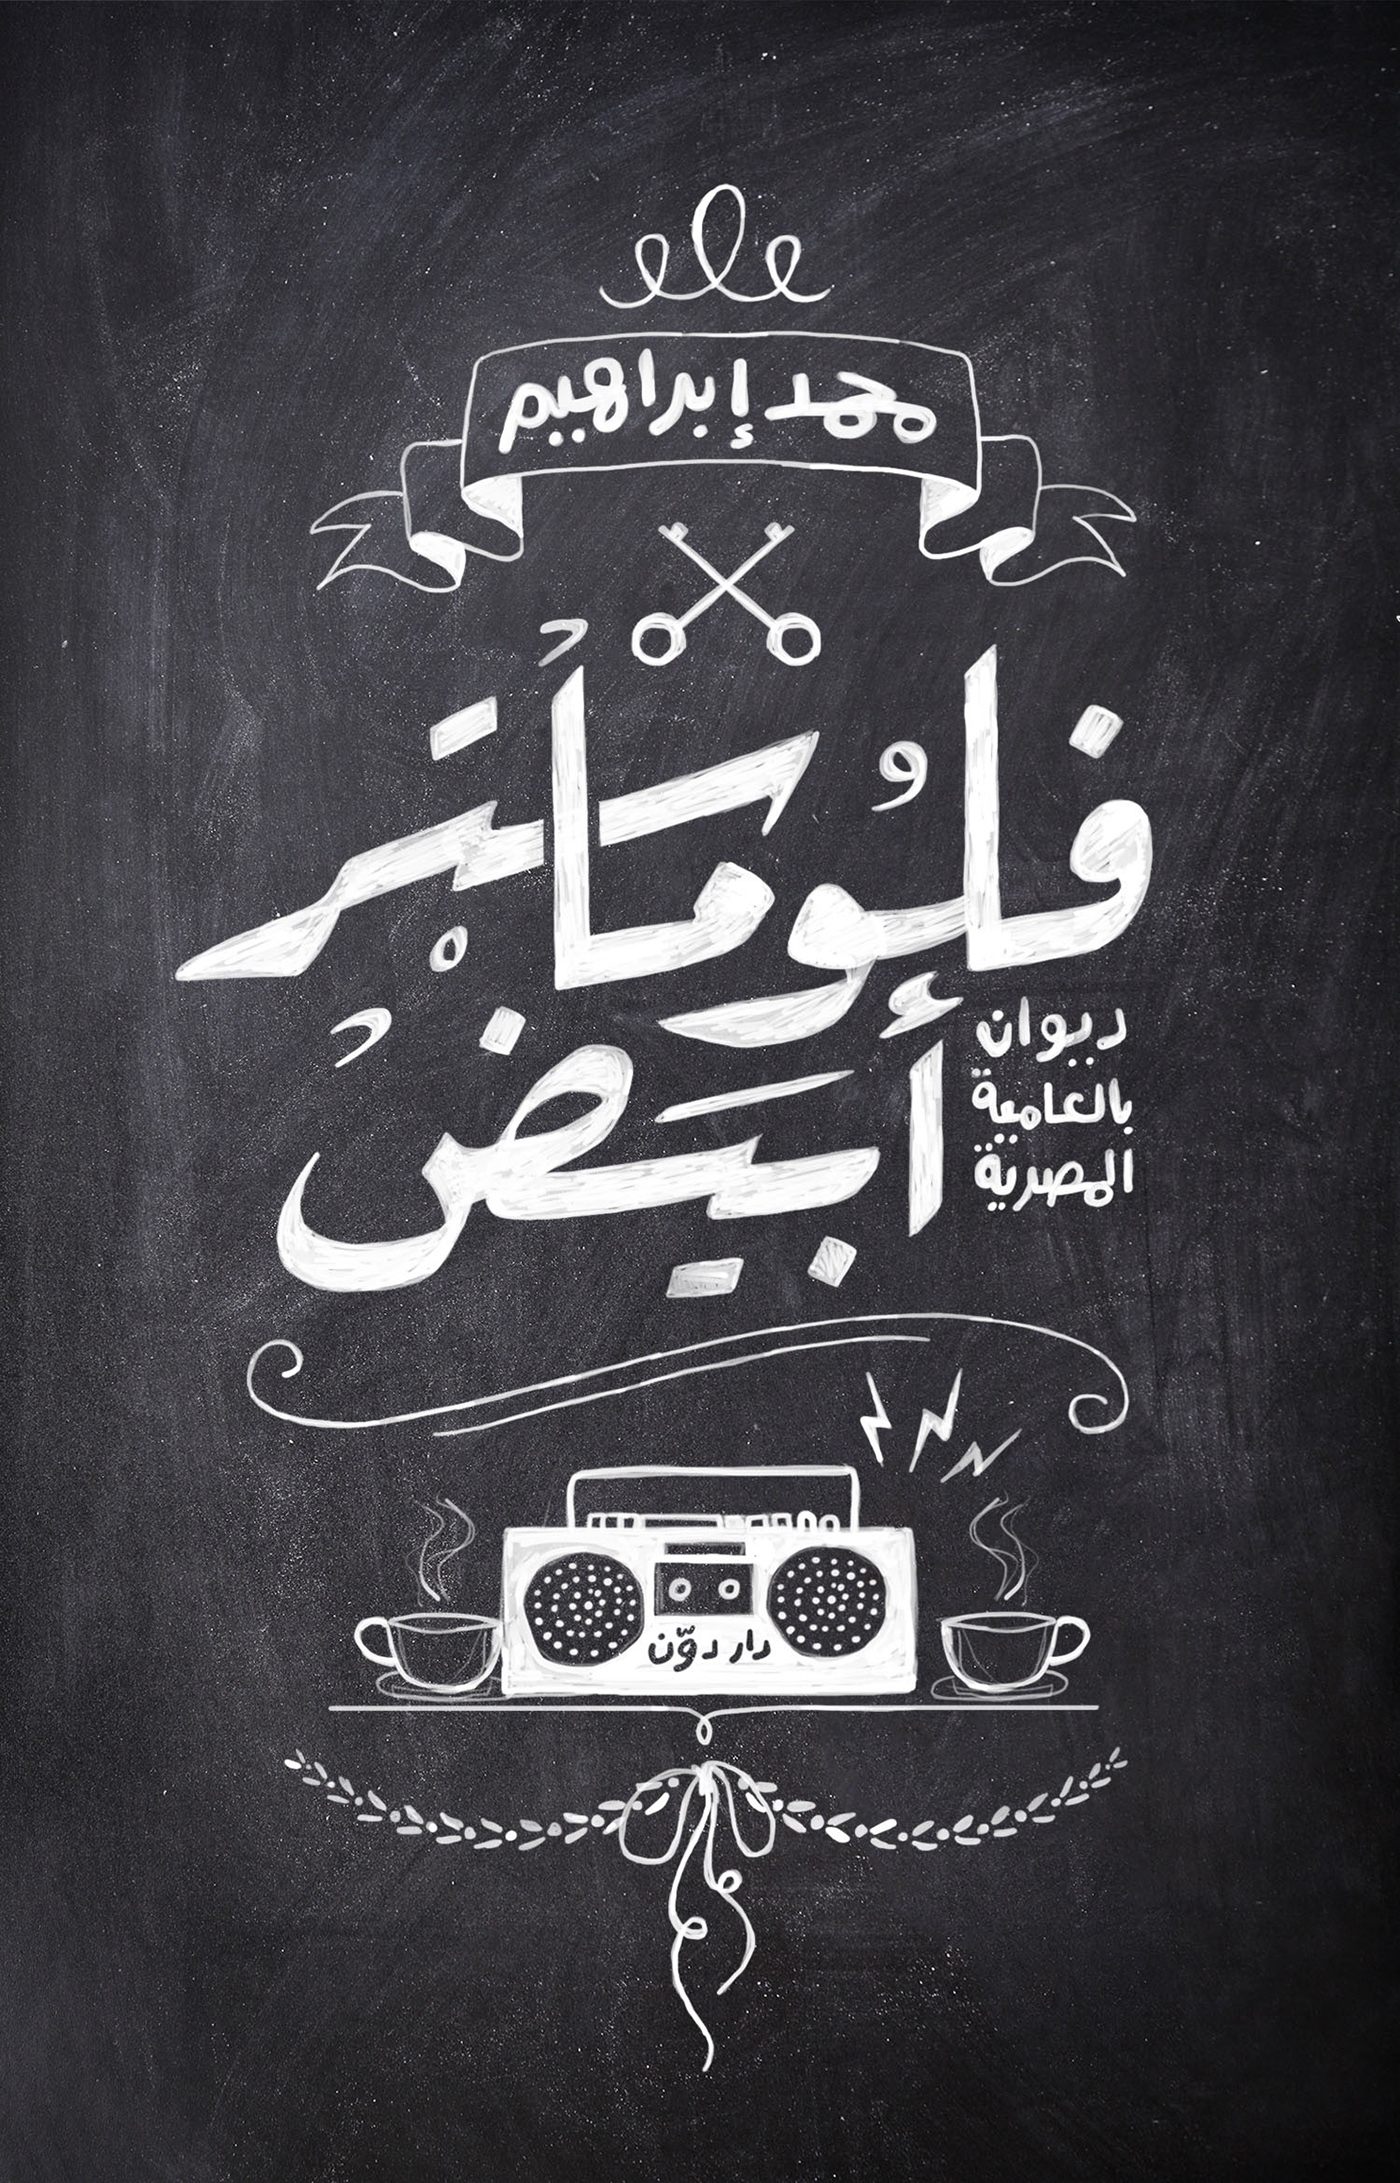 egypt karim adam book cover vintage